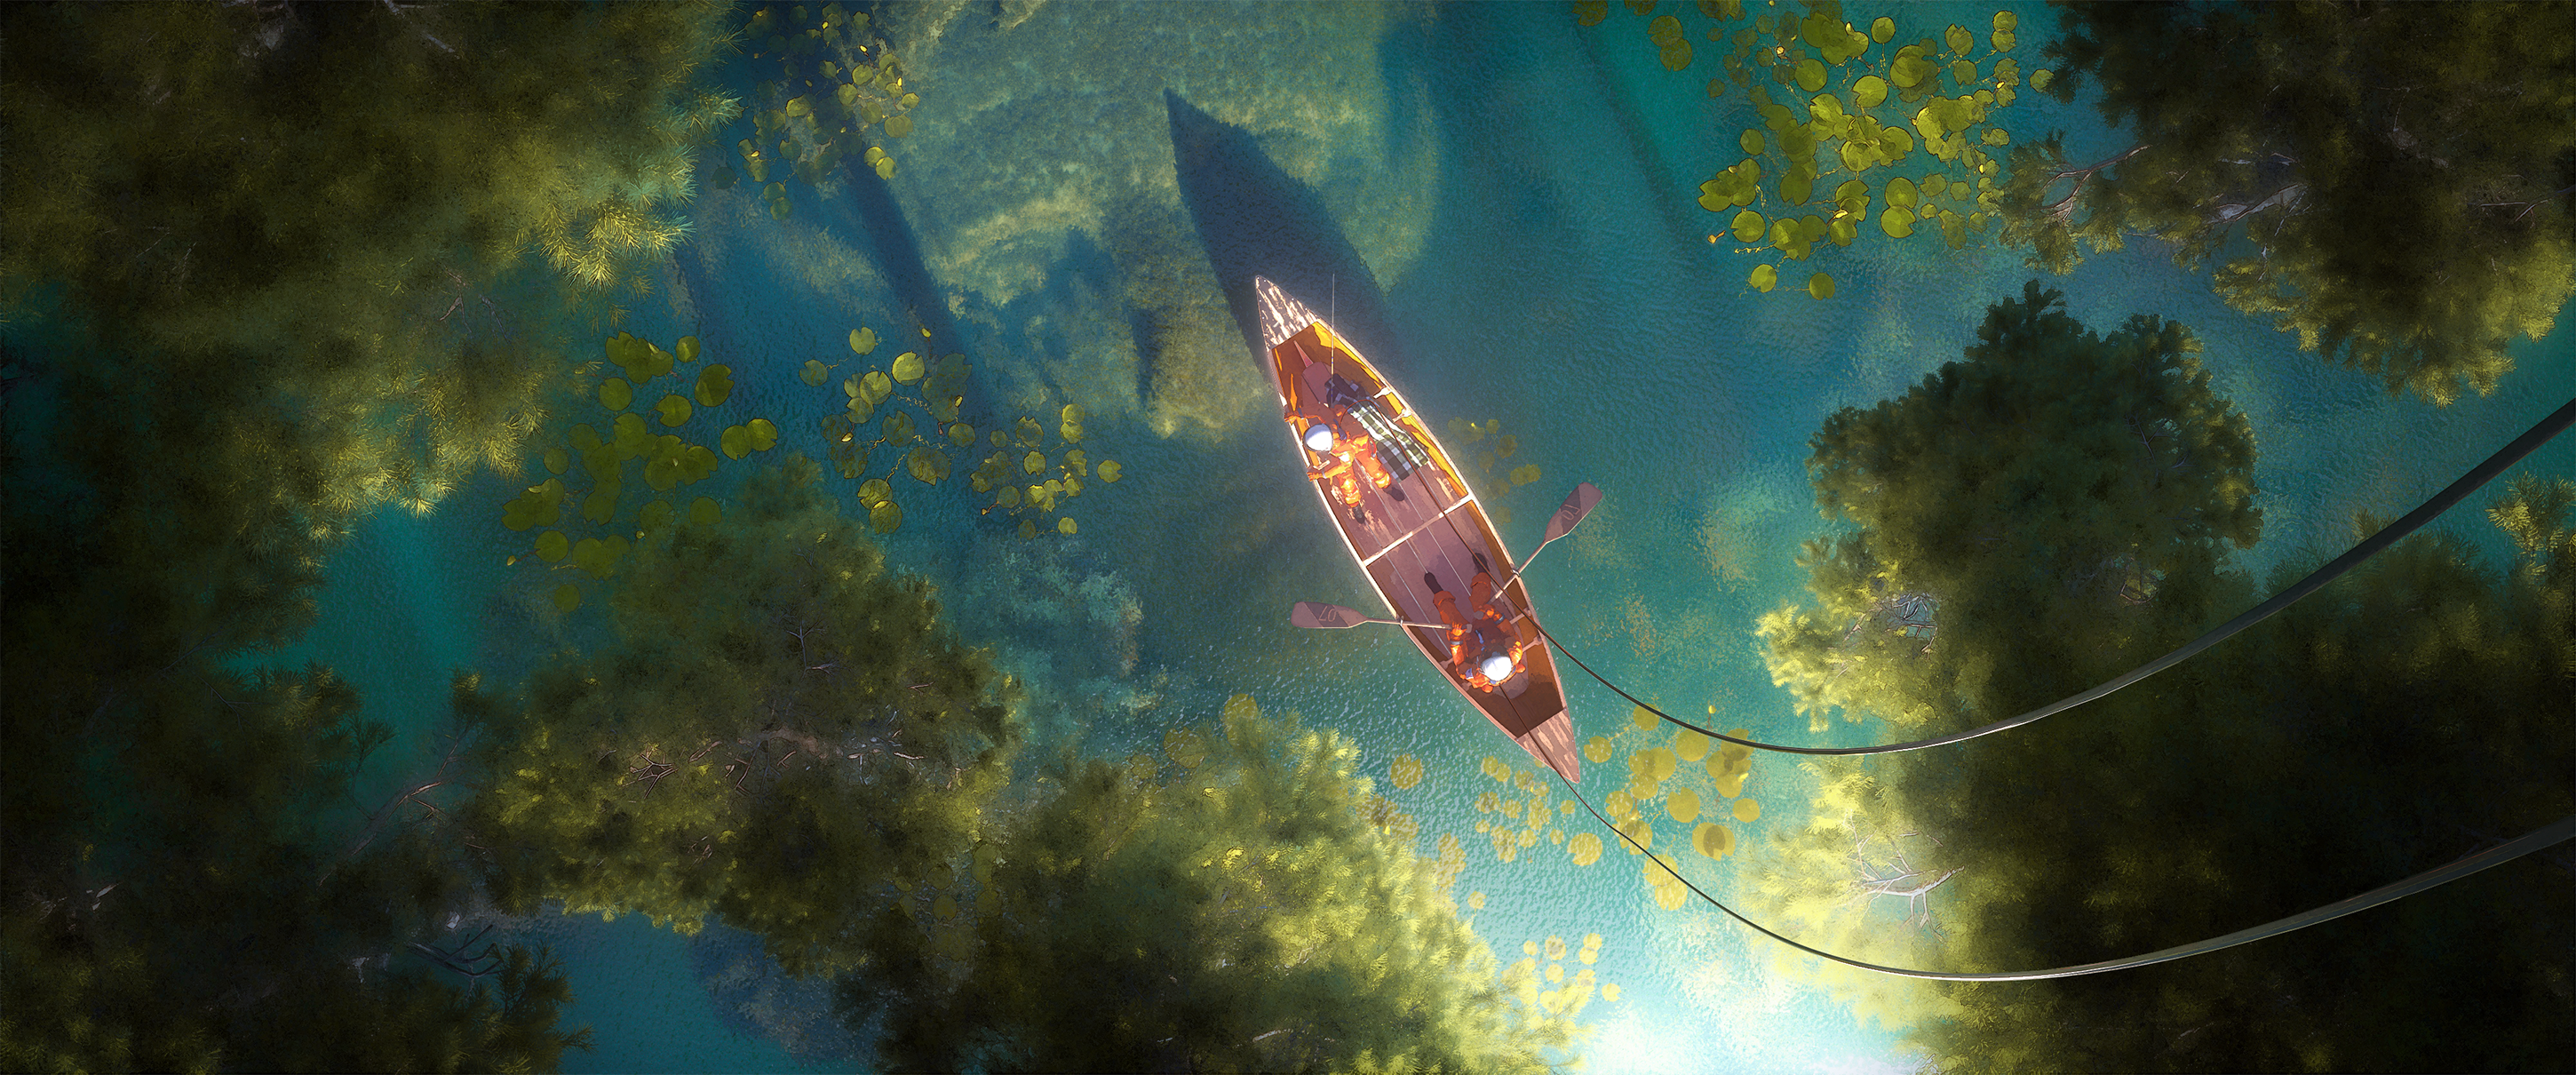 Artwork Digital Art Lake Boat Astronaut Water Lilies Plants Top View Landscape 2900x1210